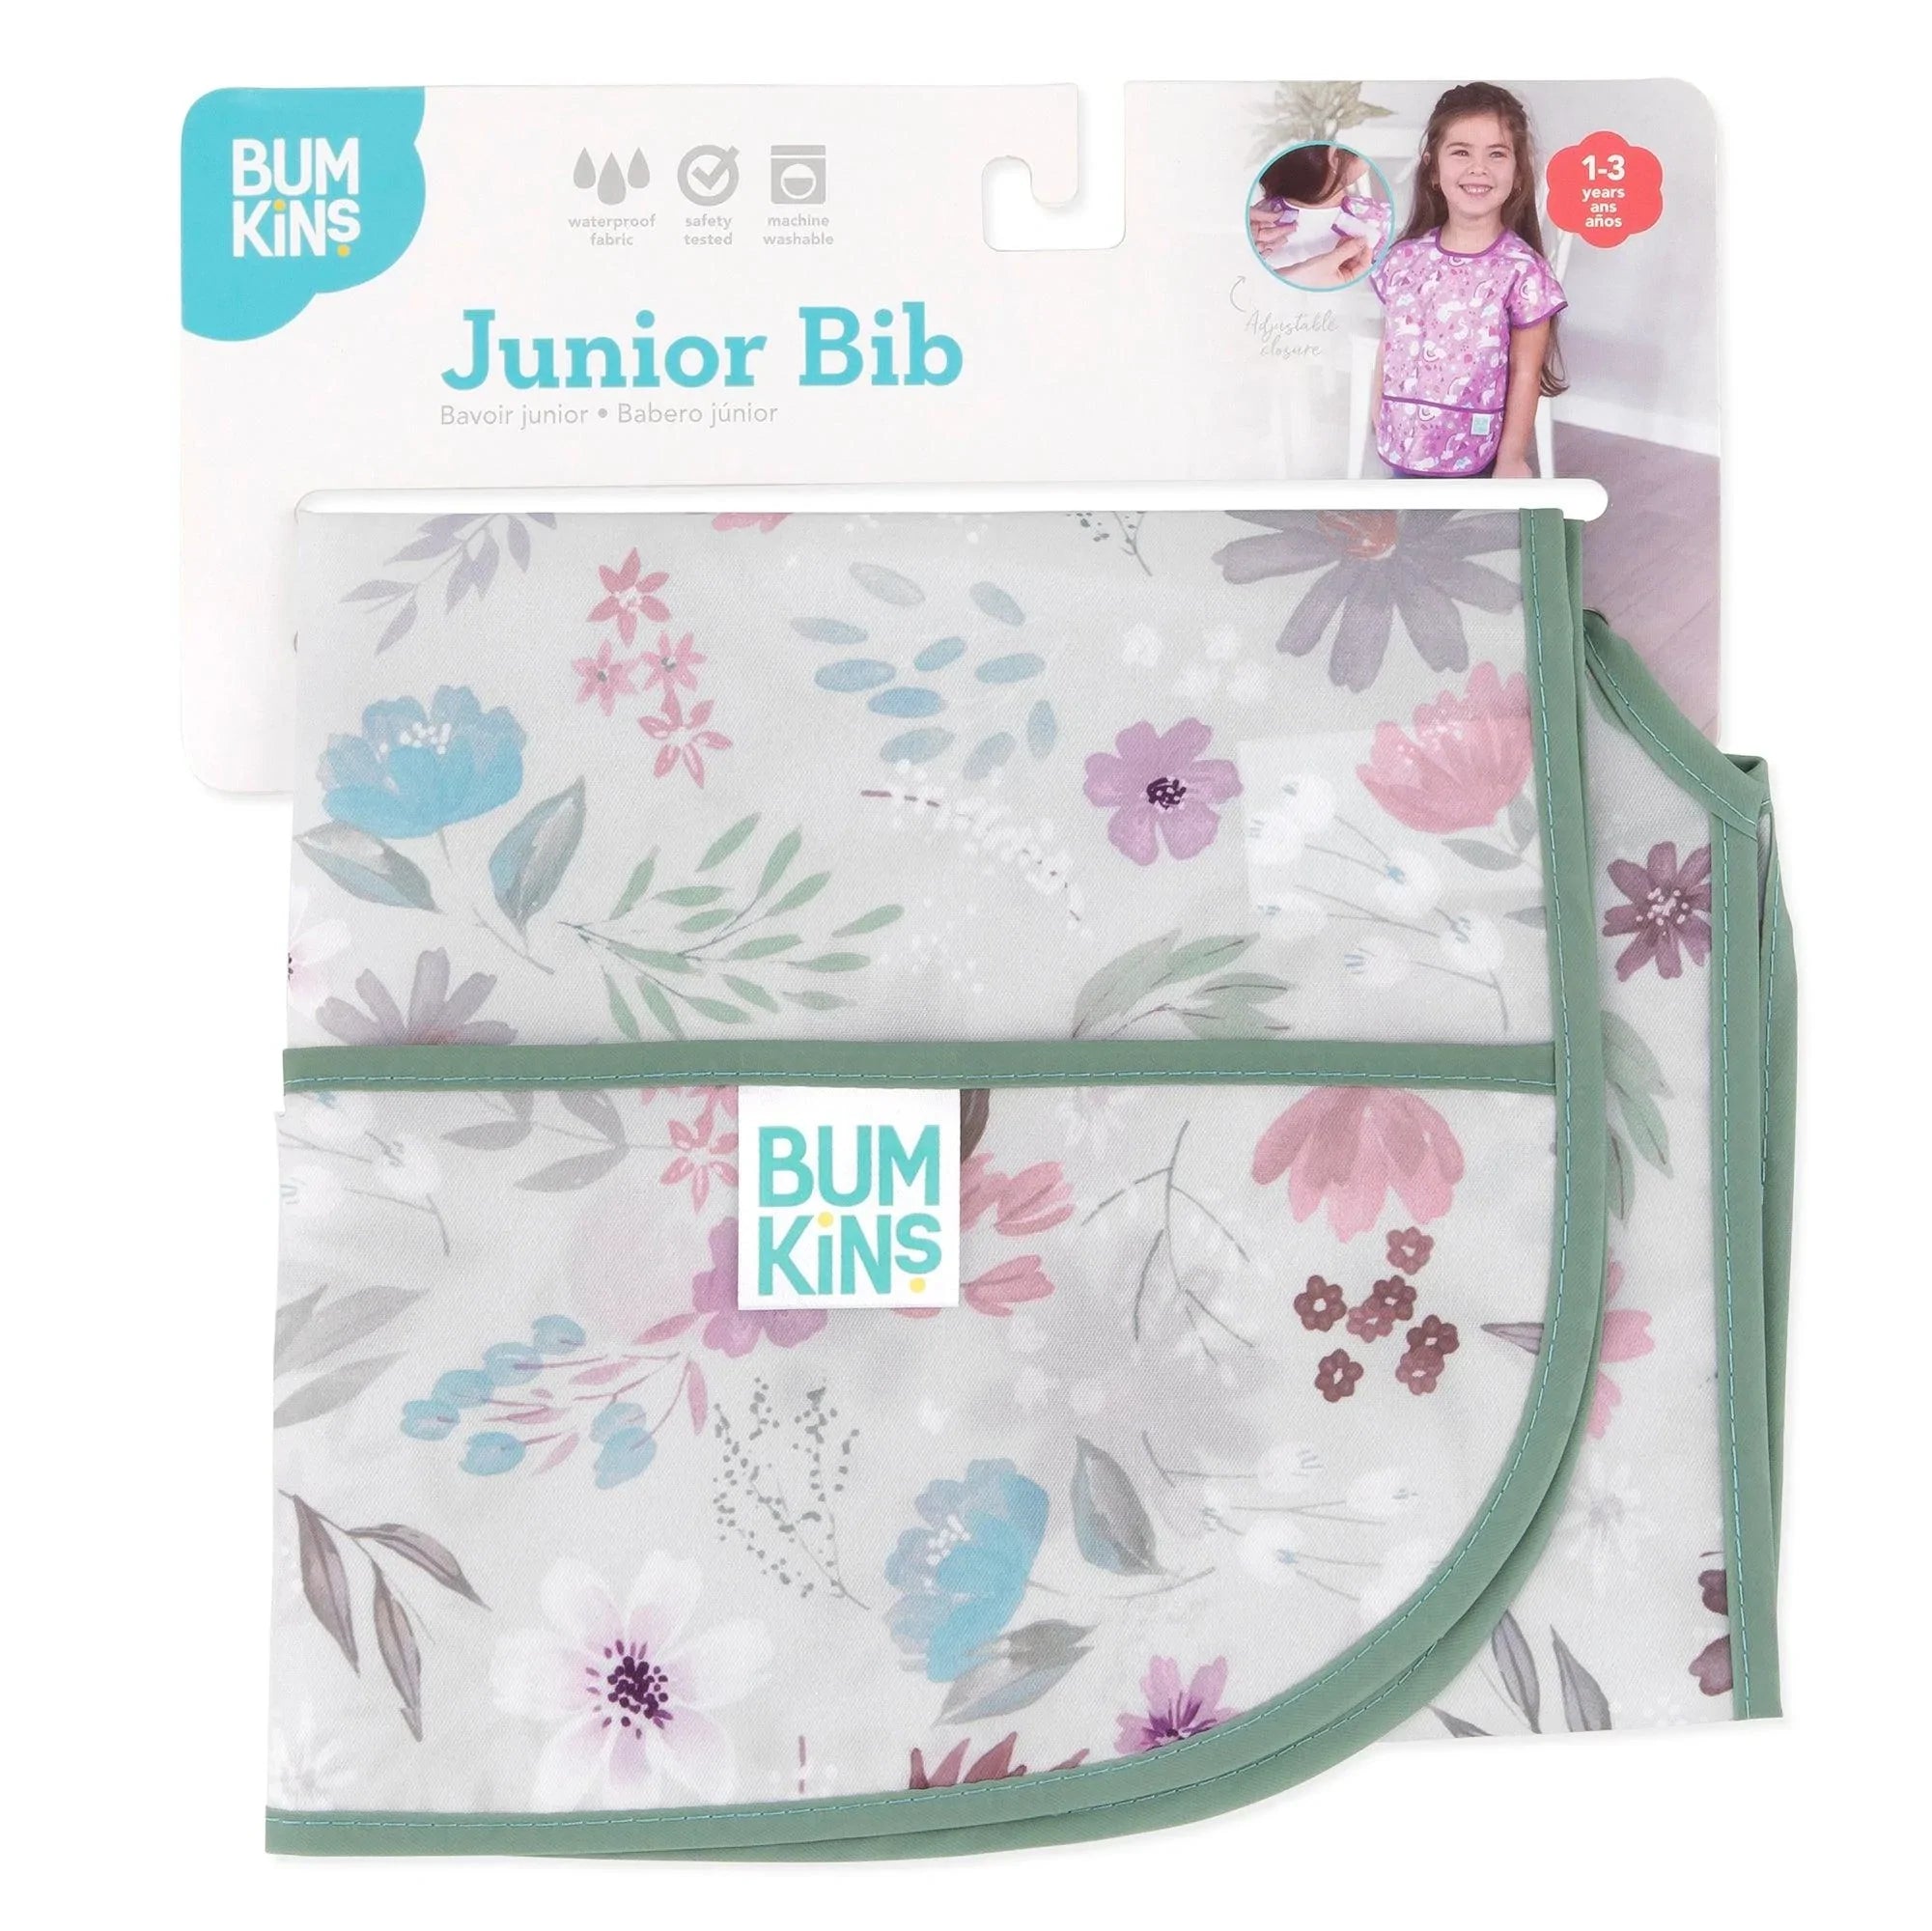 Junior Bib: Floral - Bumkins